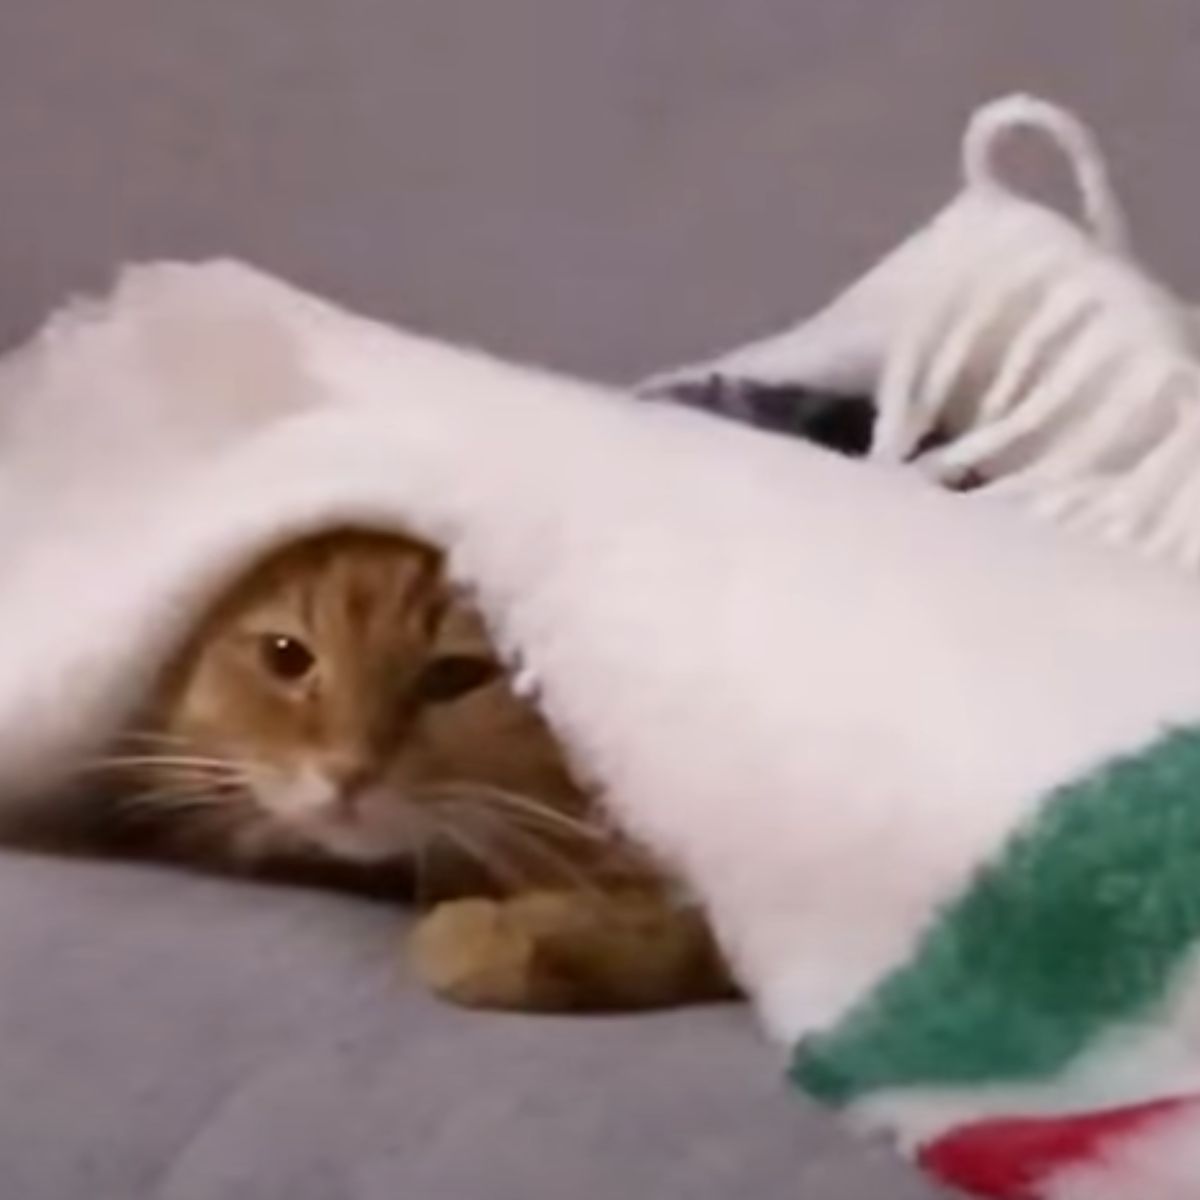 cat under the blanket